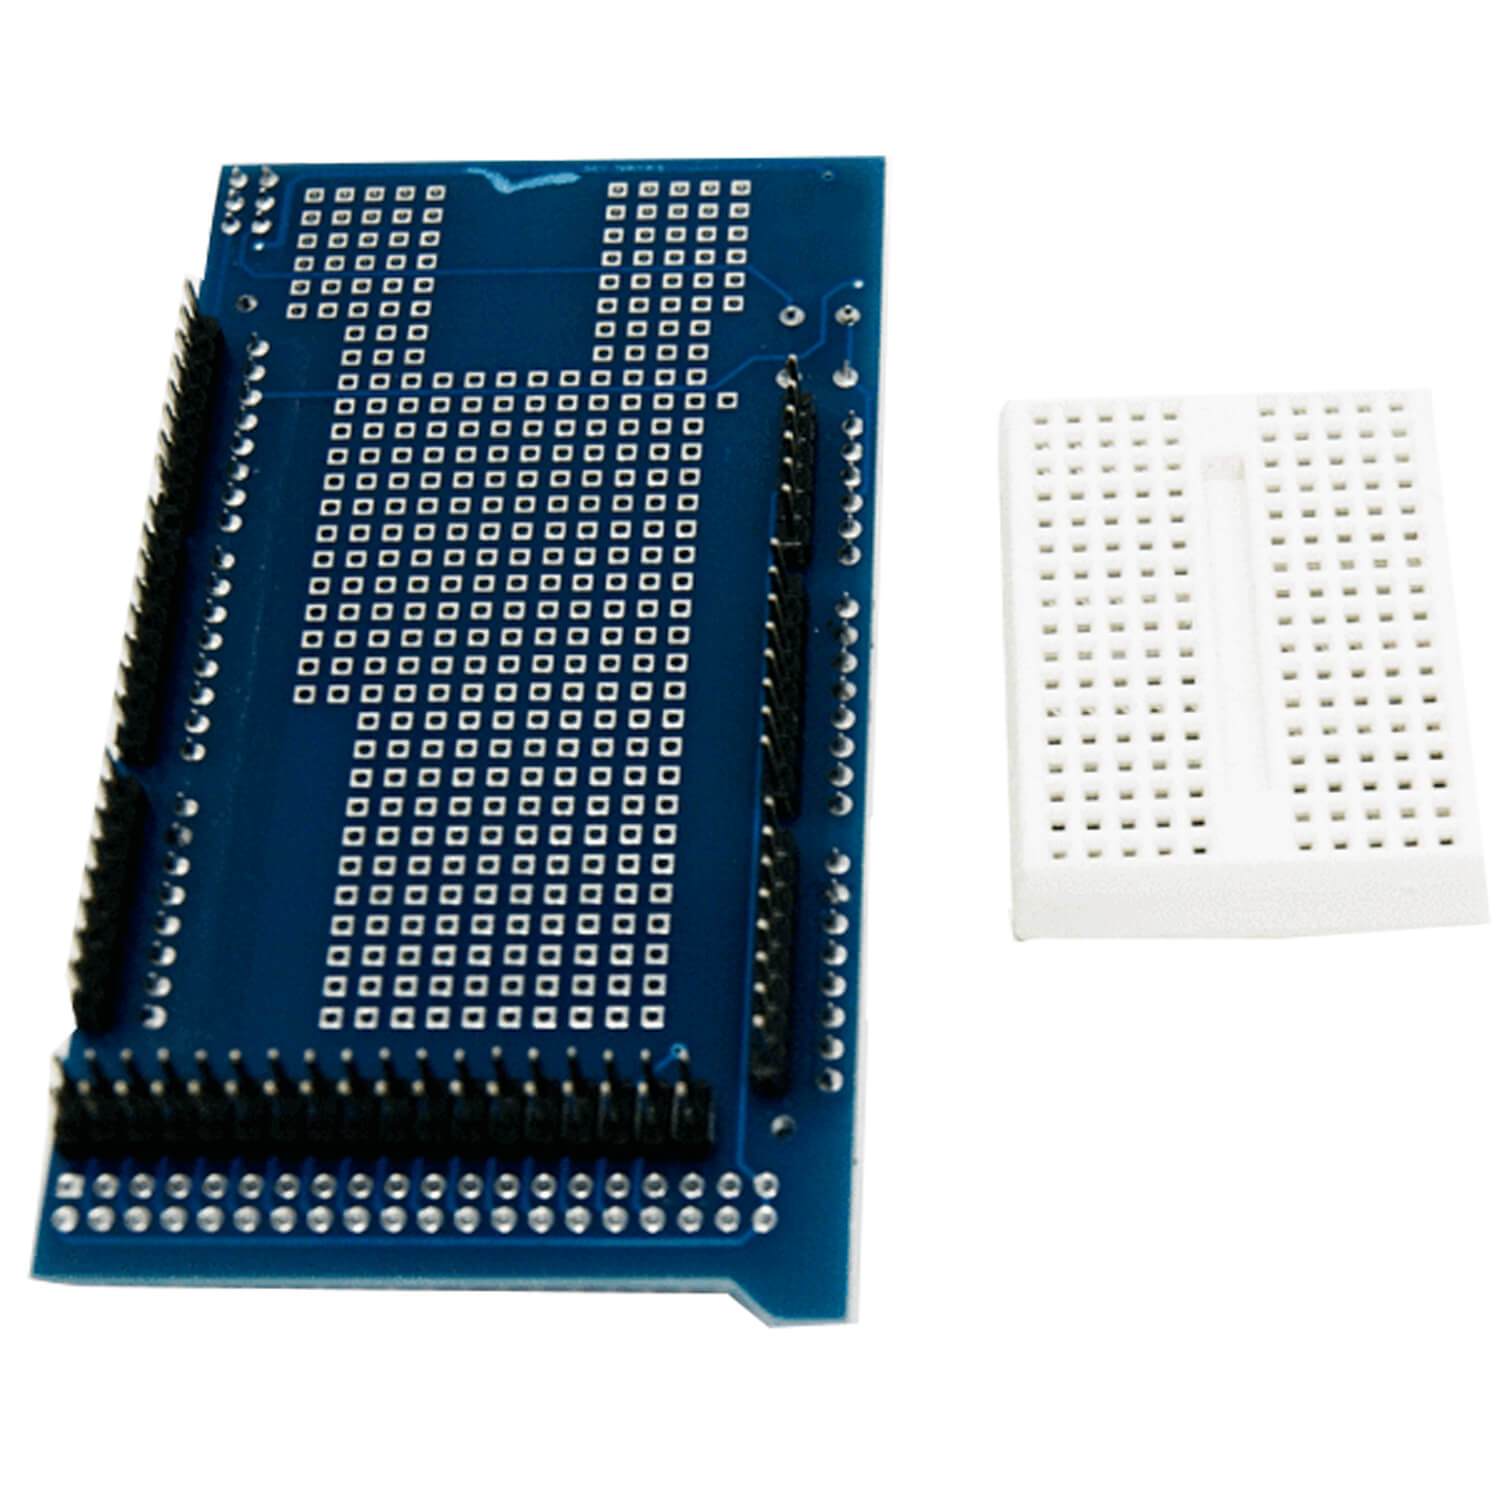 Prototyping Prototype Shield mit Mini Breadboard für MEGA 2560 - AZ-Delivery